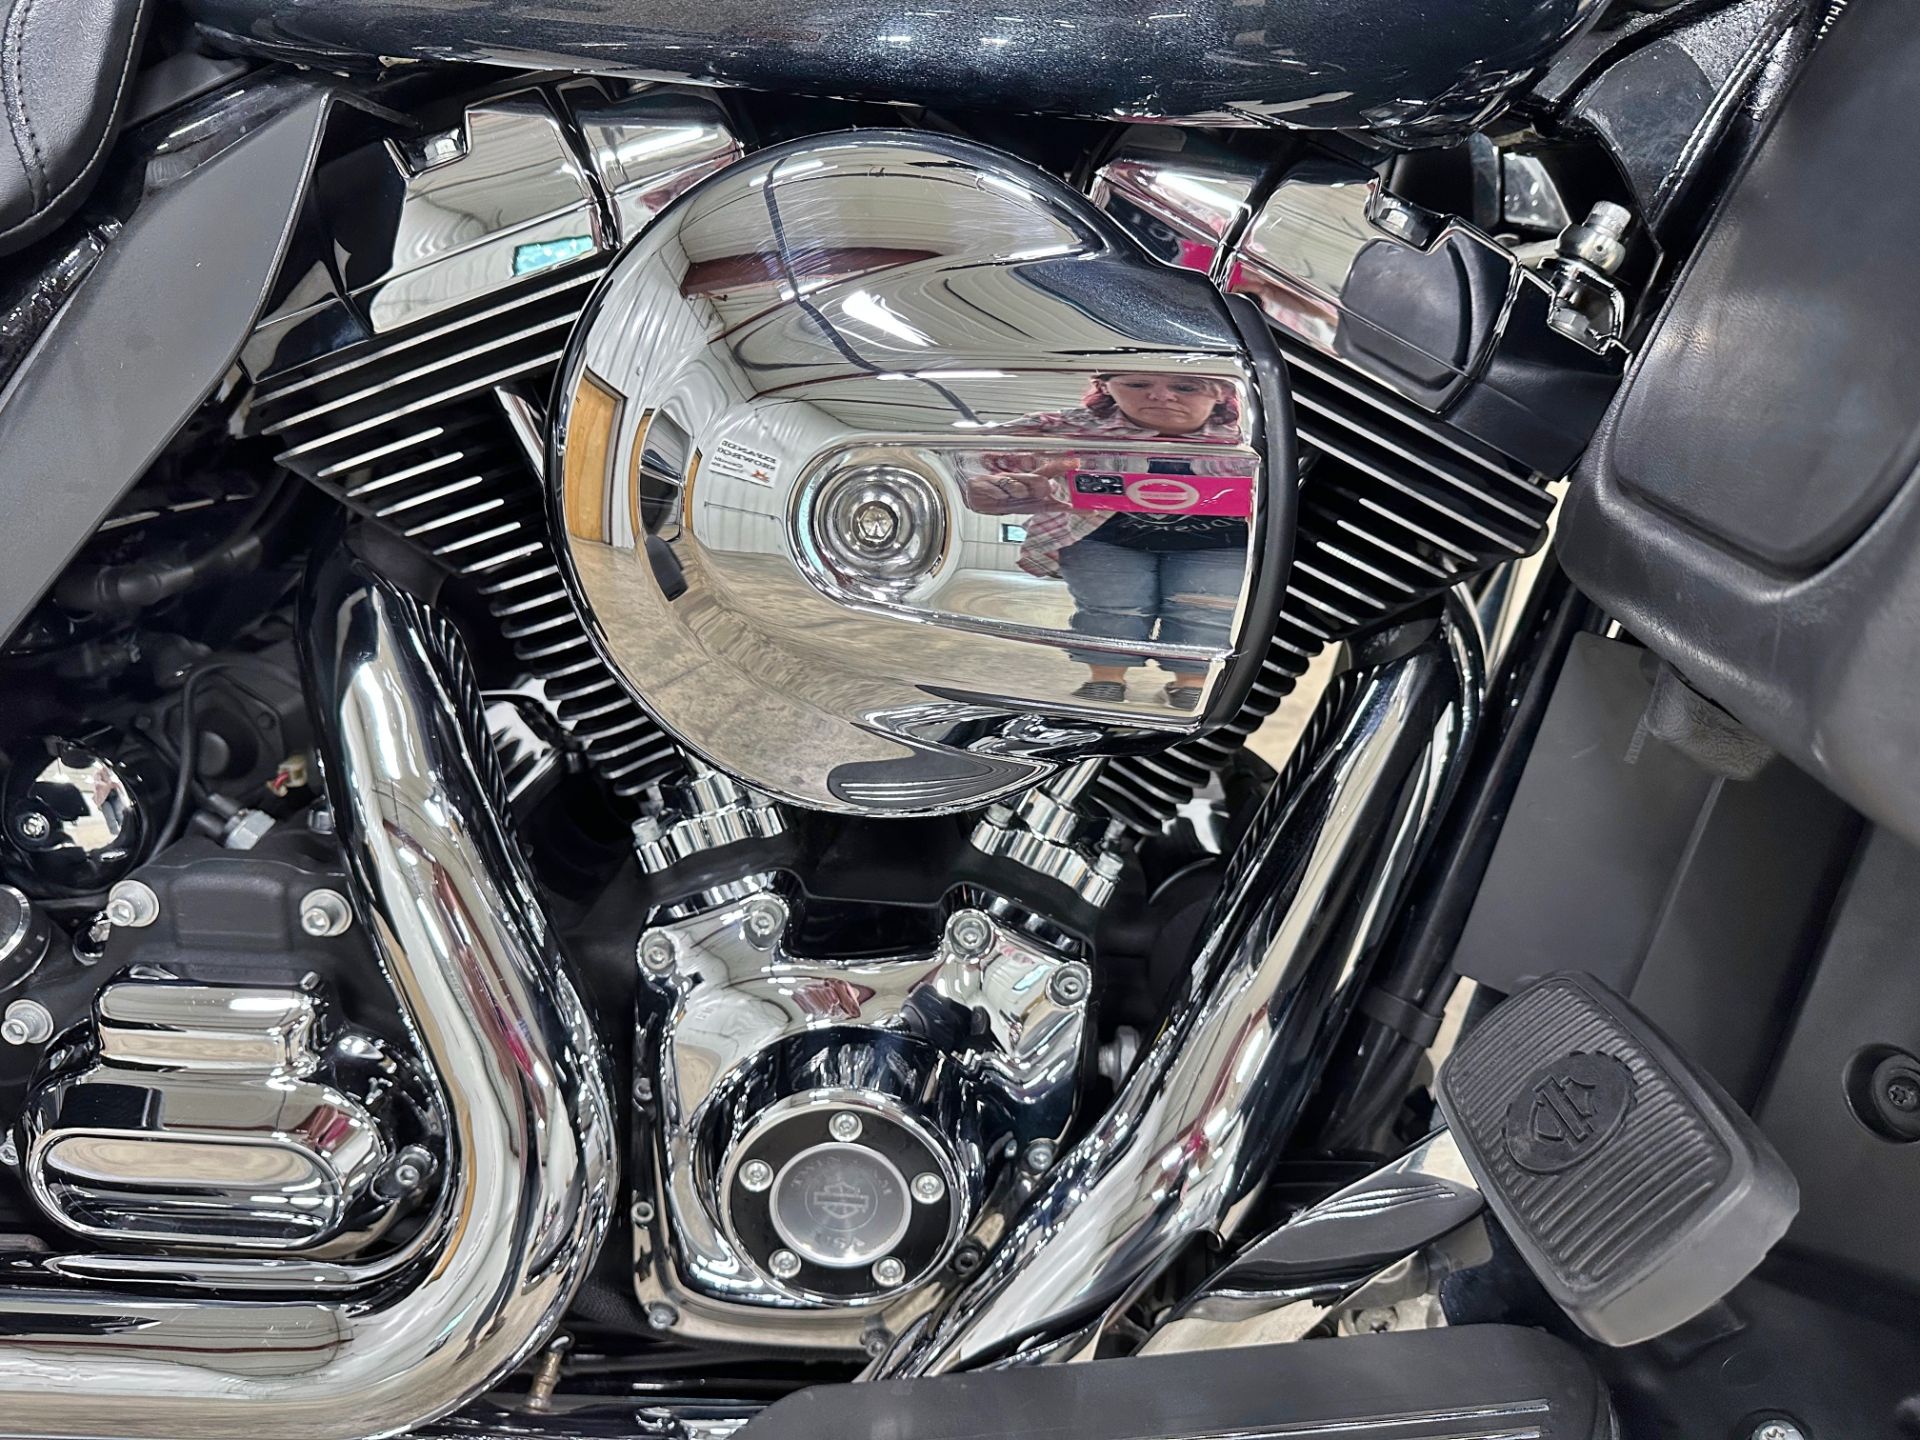 2015 Harley-Davidson Electra Glide® Ultra Classic® Low in Sandusky, Ohio - Photo 2